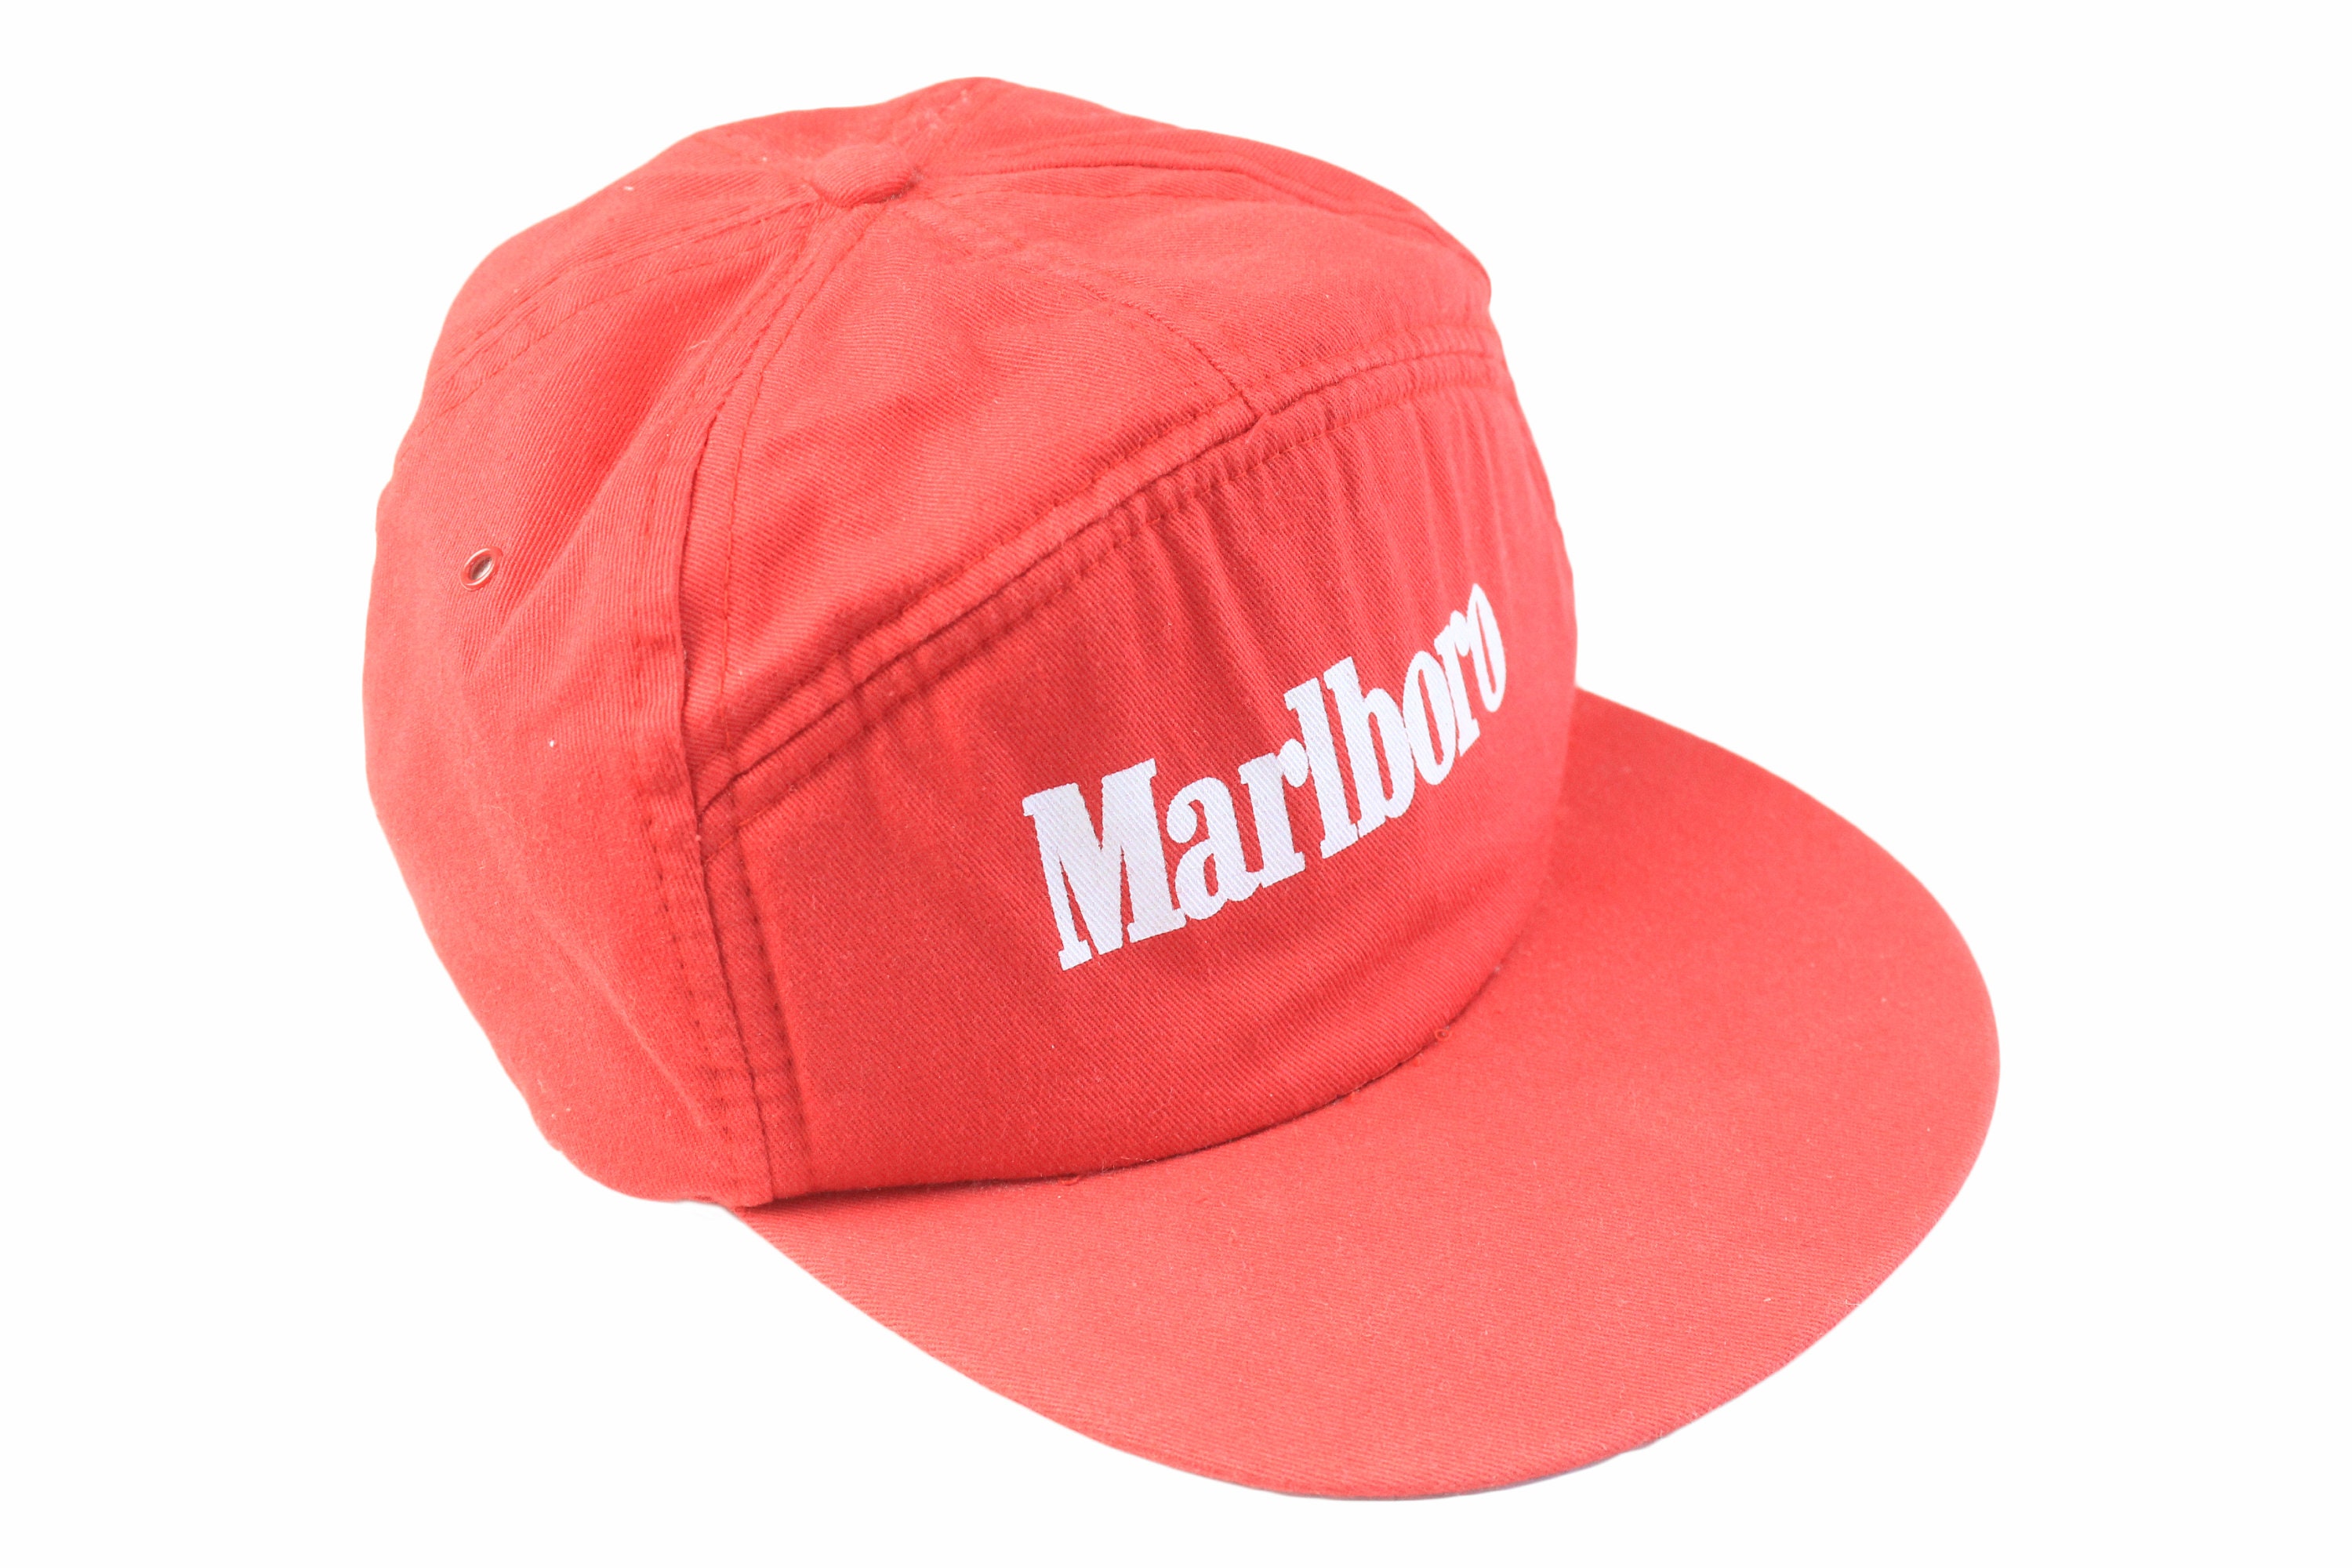 DetailRed Marlboro package beanie 赤マル